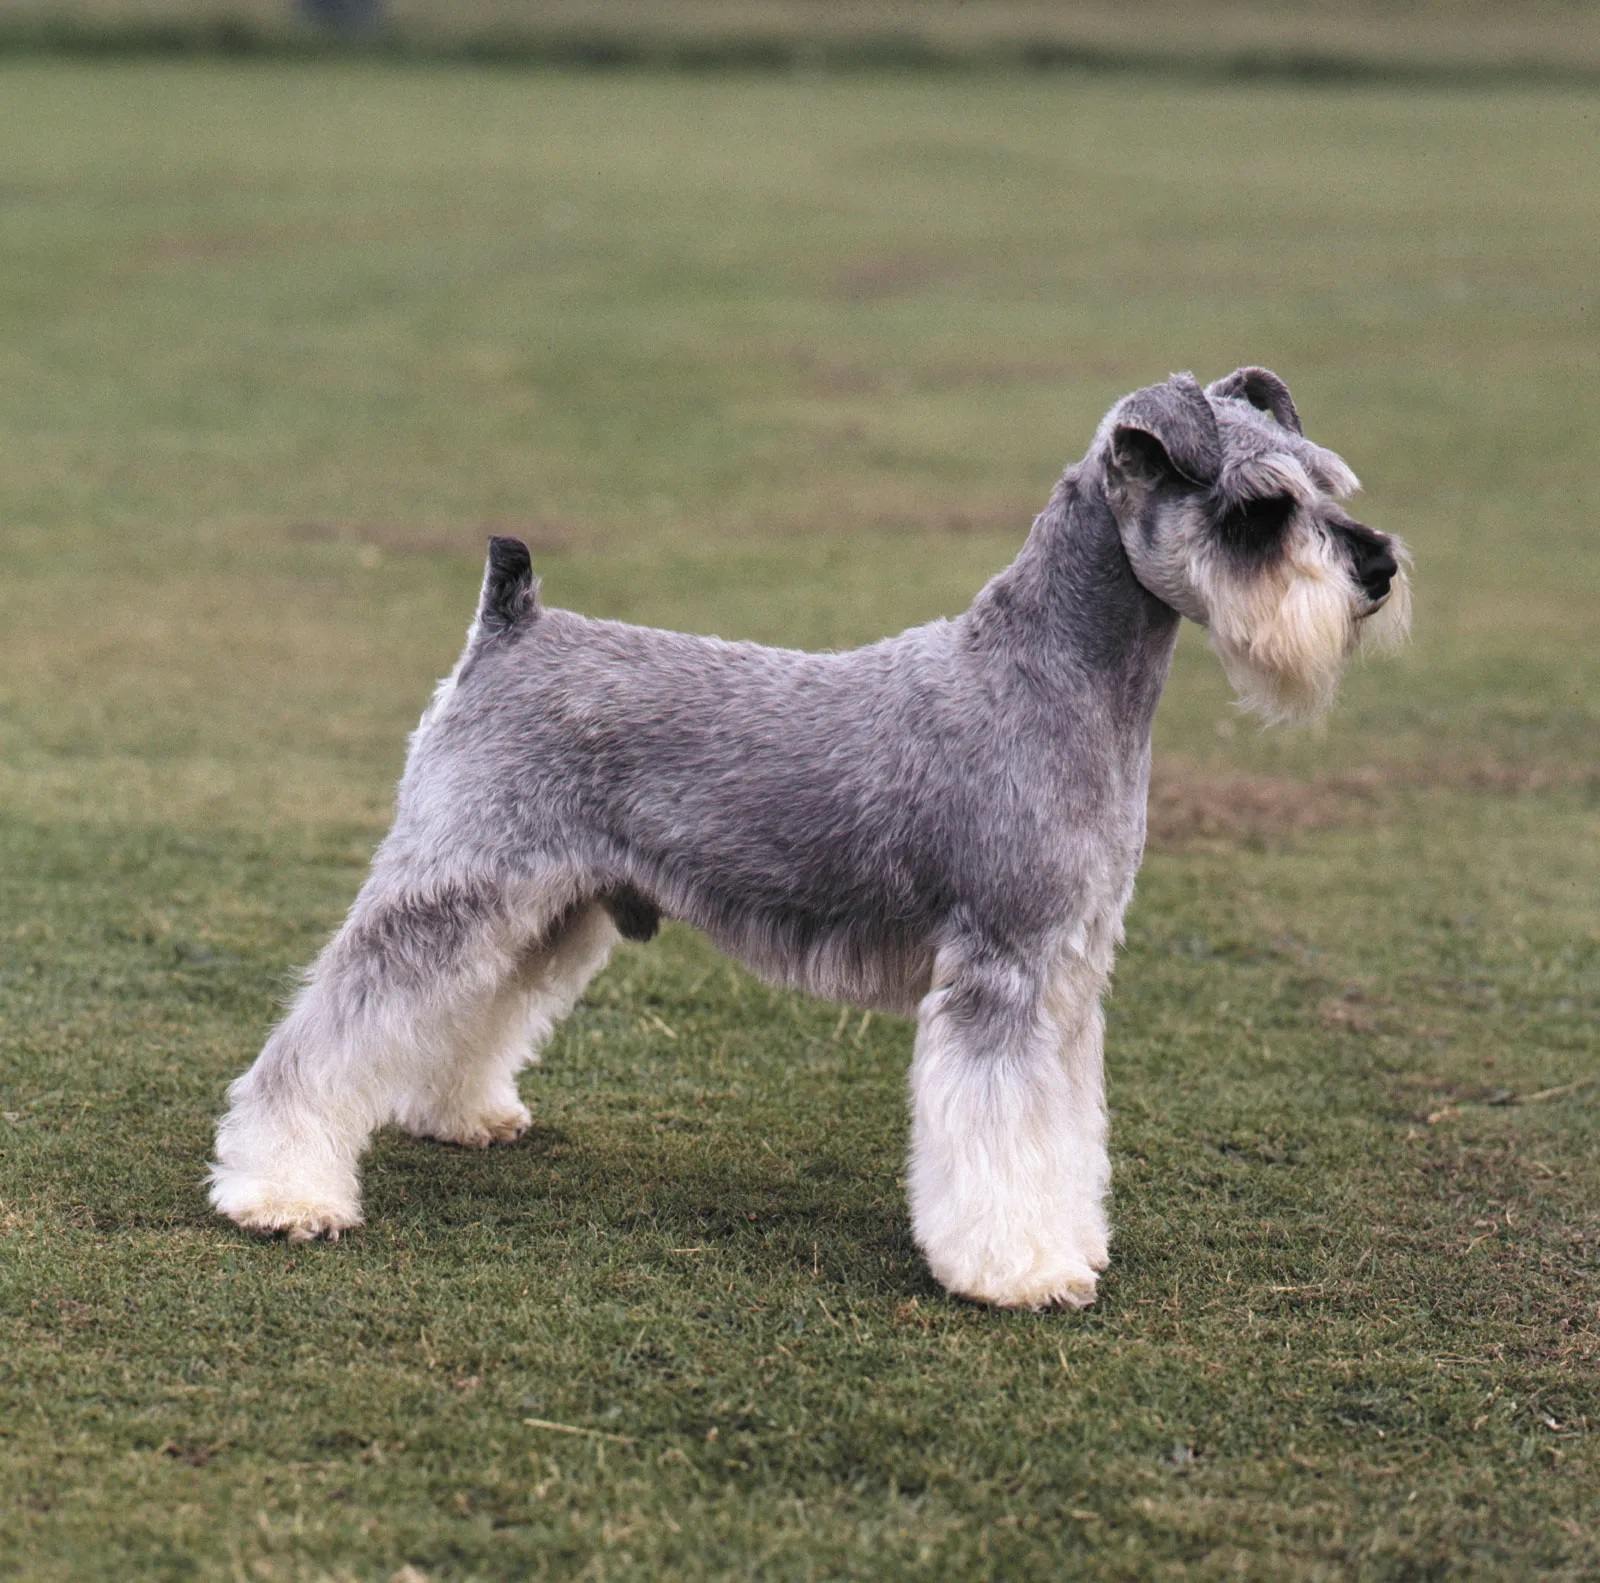 Miniature Schnauzer Dog Breed, Origin, History, Personality & Care Needs